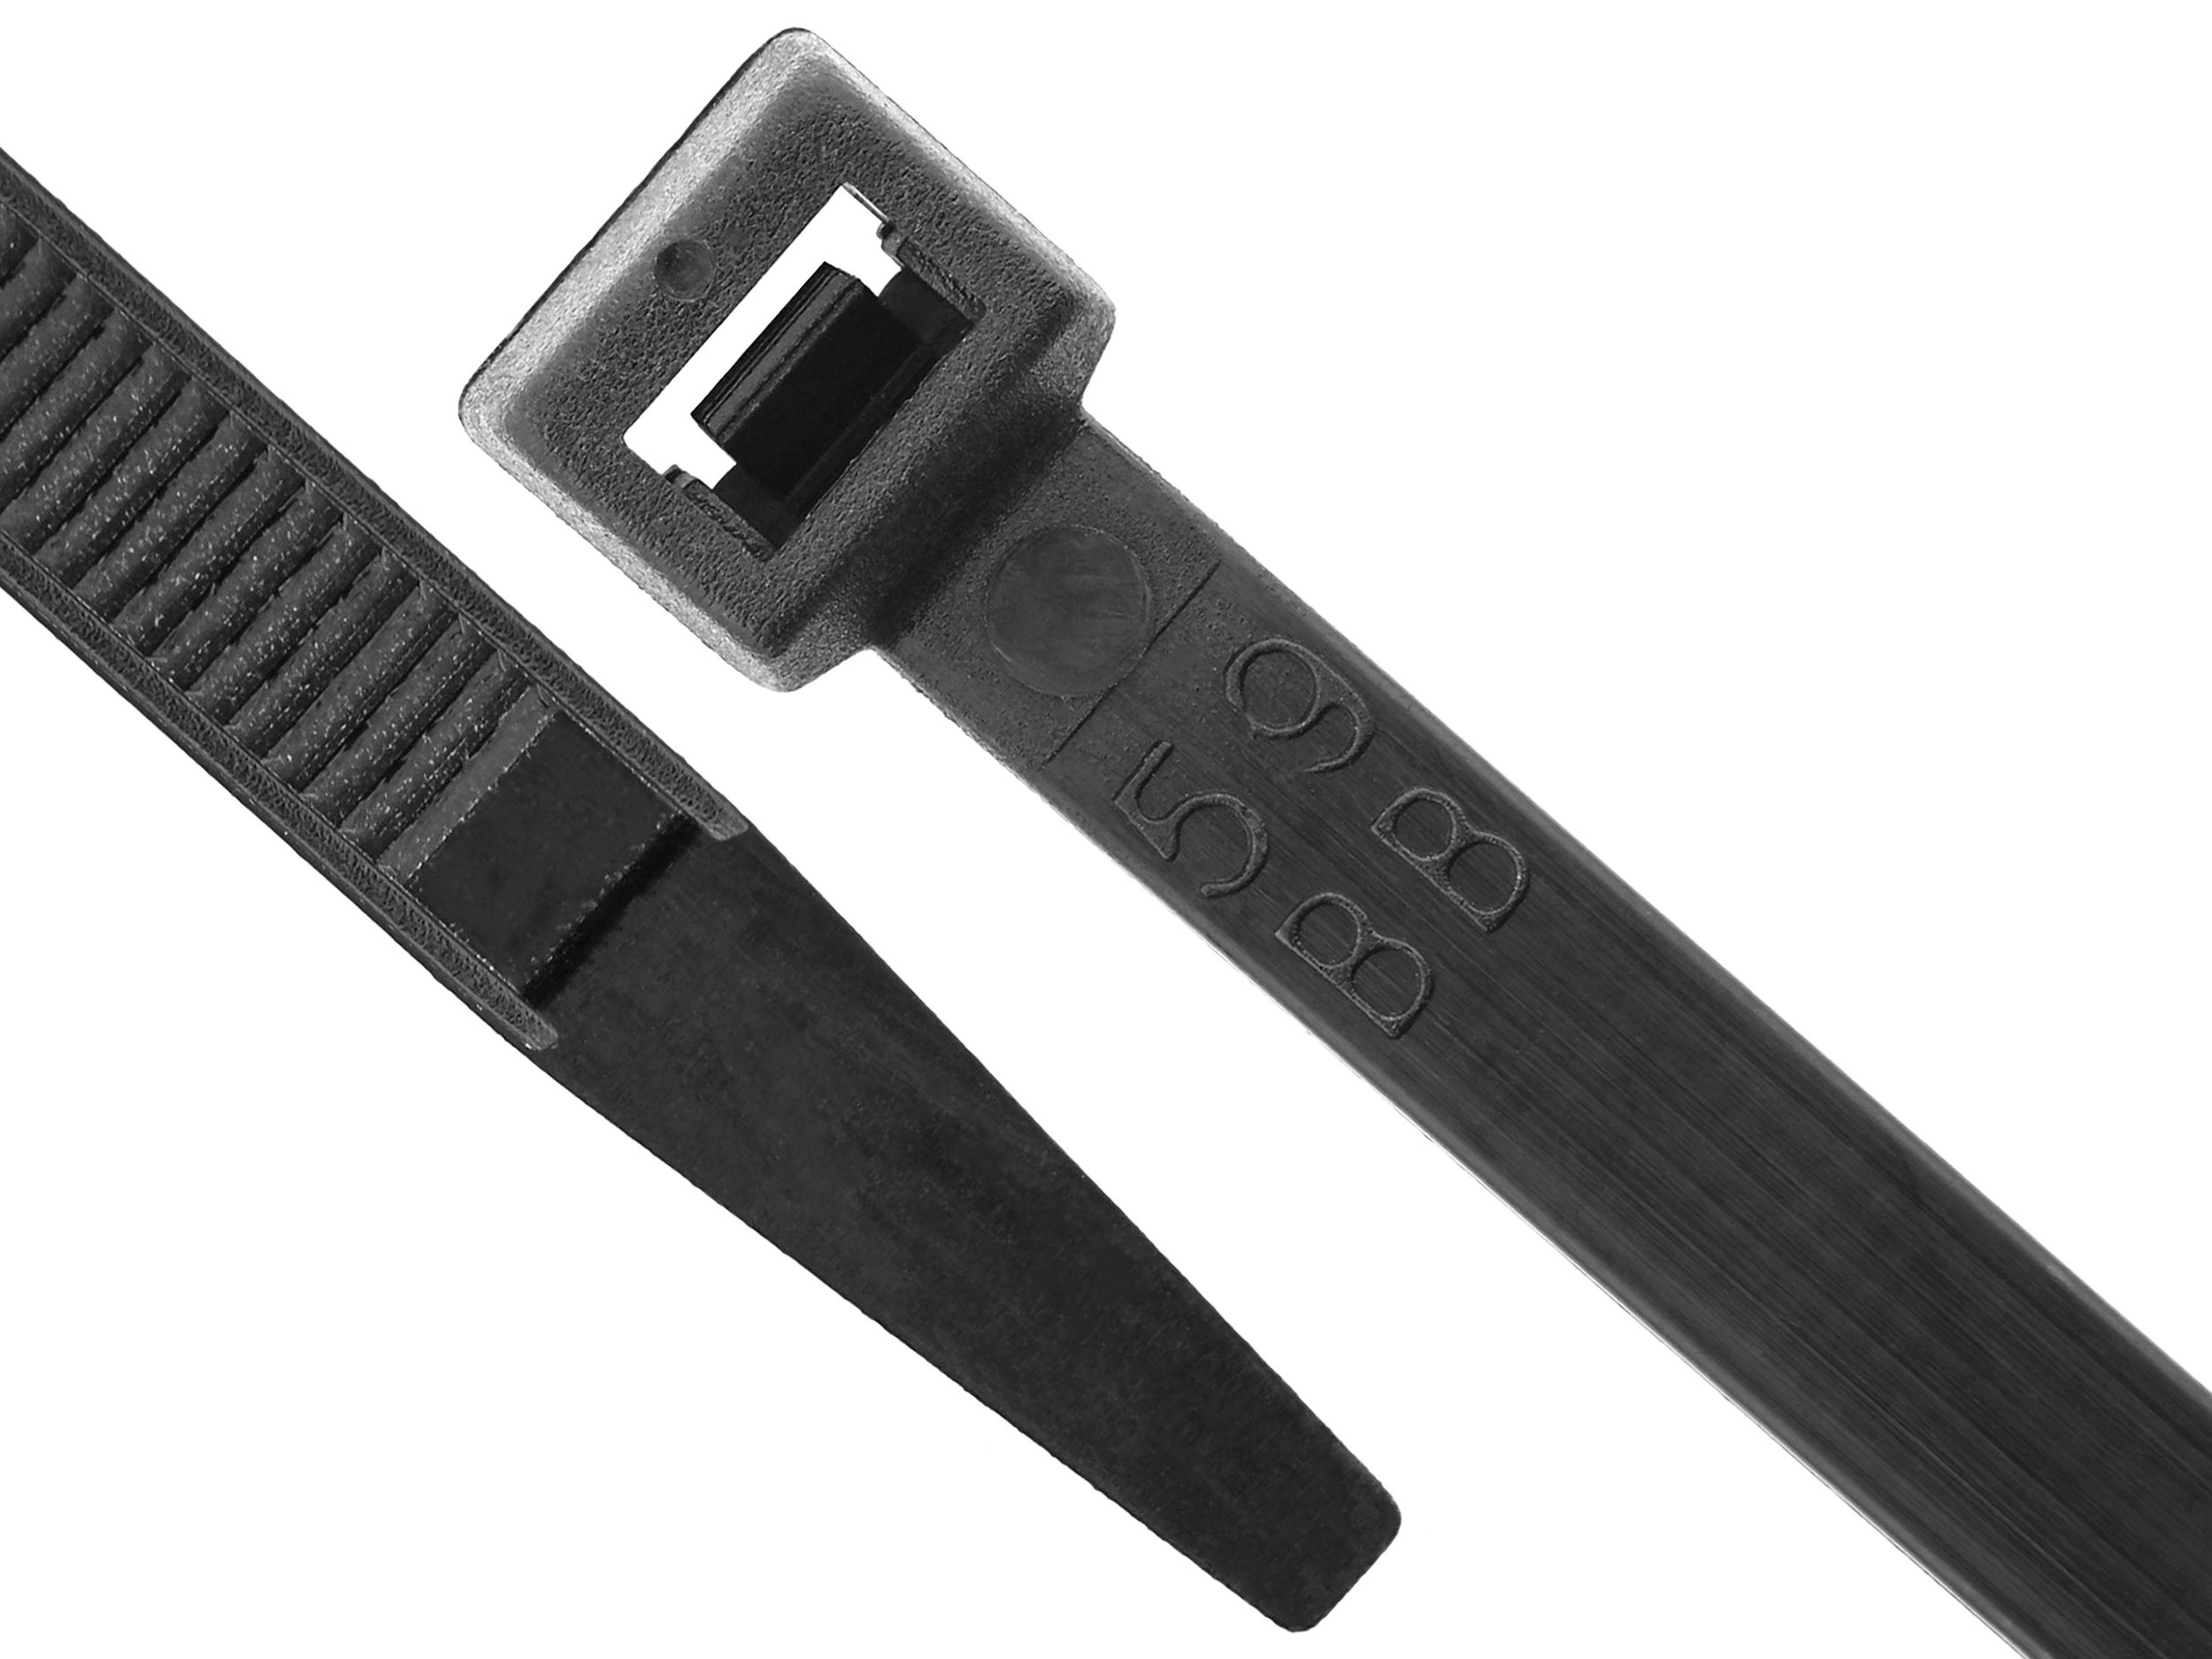 11 in. UV-Resistant Black Cable Ties, 100-Pack